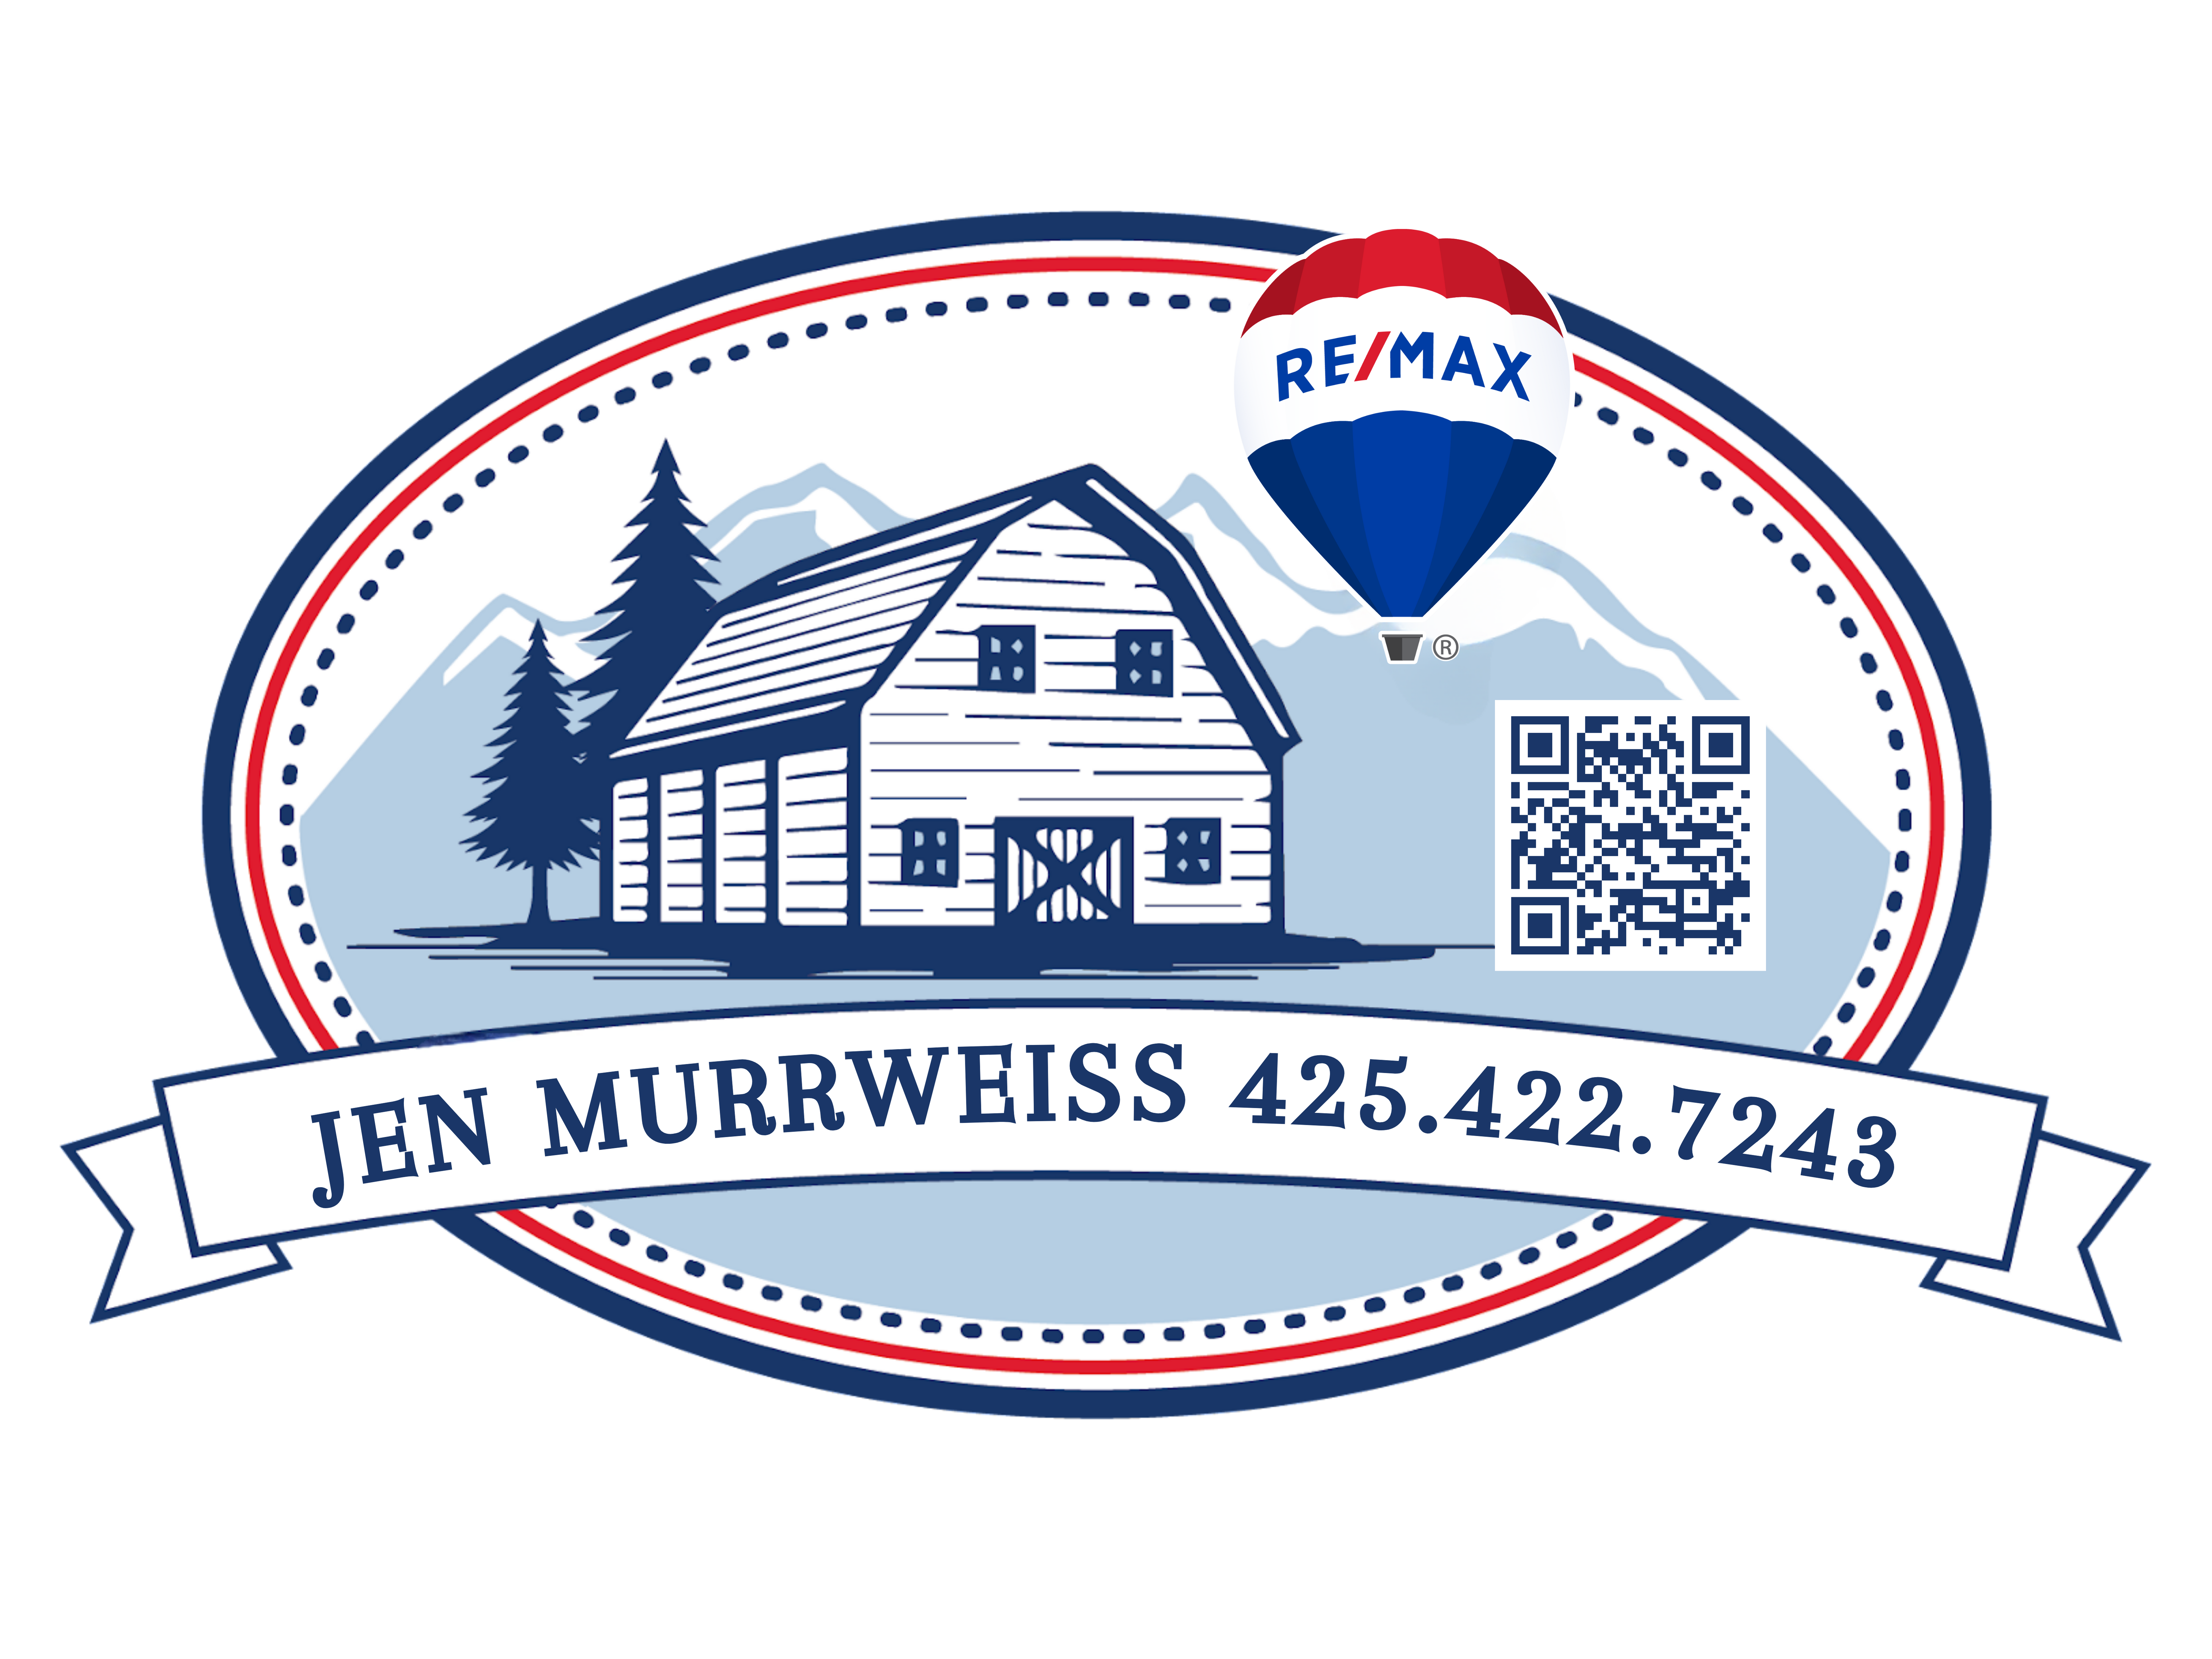 Snohomish County Homes Inc. - Jen Murrweiss